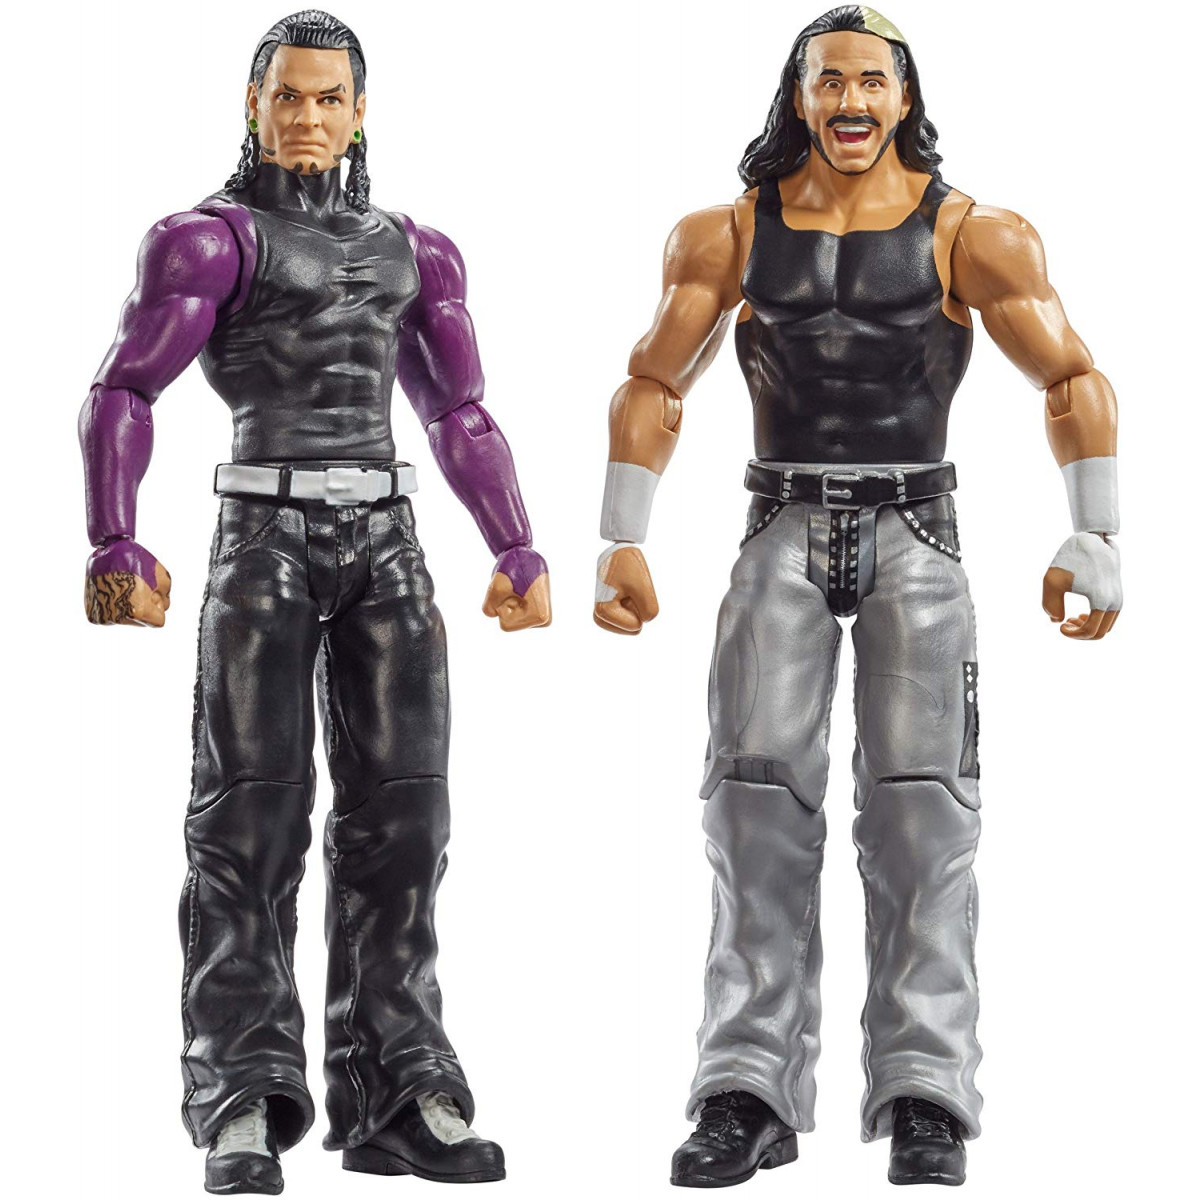 WWE Jeff Hardy and Matt Hardy Action Figures, 2-pack